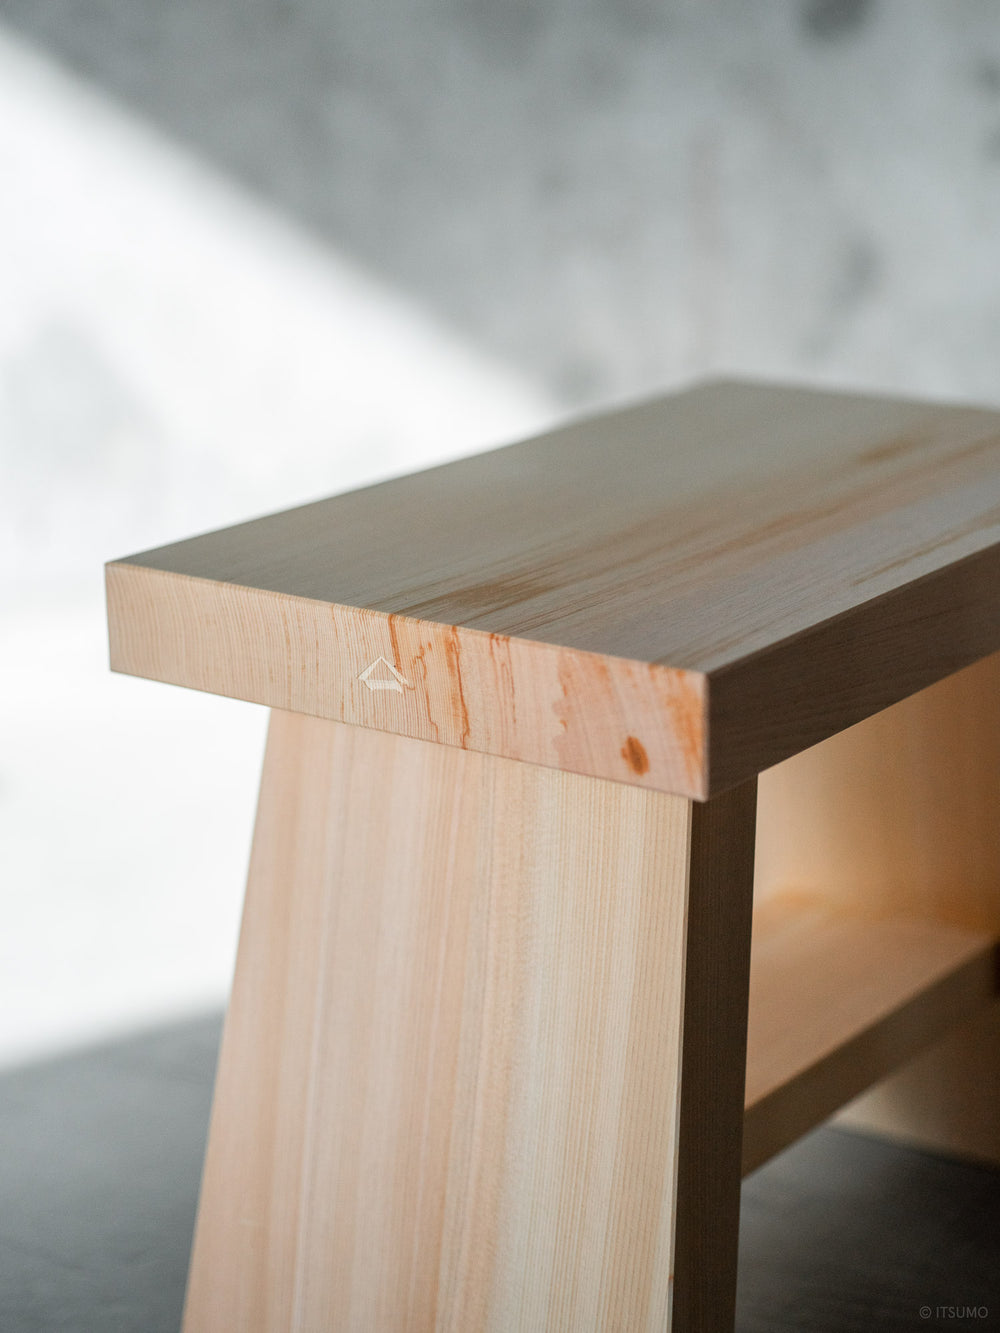 Close up detail of the wood grain on the Azmaya hinoki bath stool